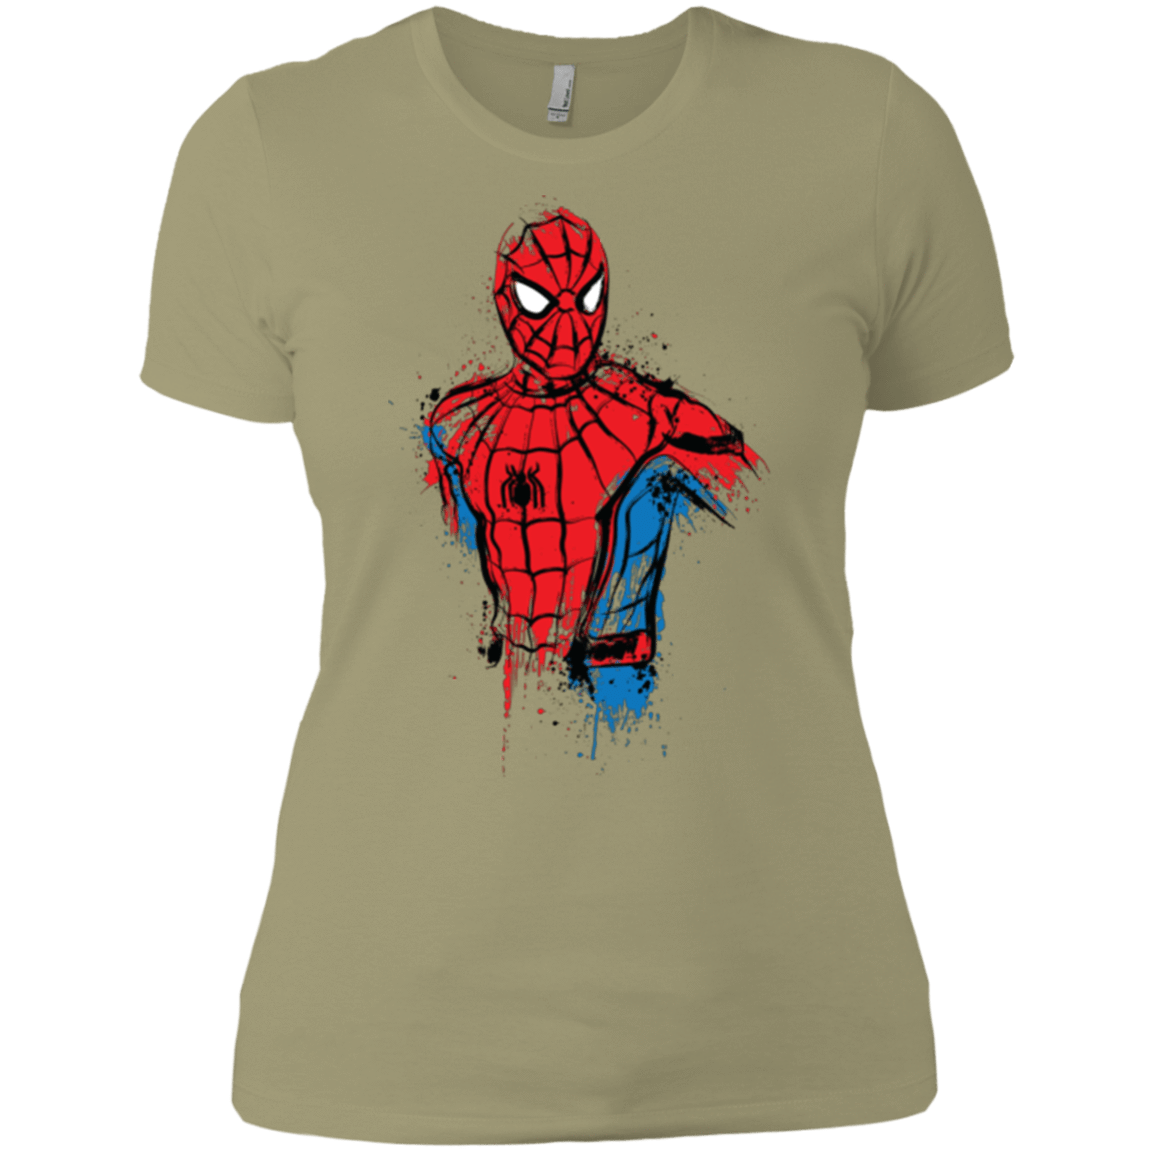 T-Shirts Light Olive / X-Small Spiderman- Friendly Neighborhood Women's Premium T-Shirt